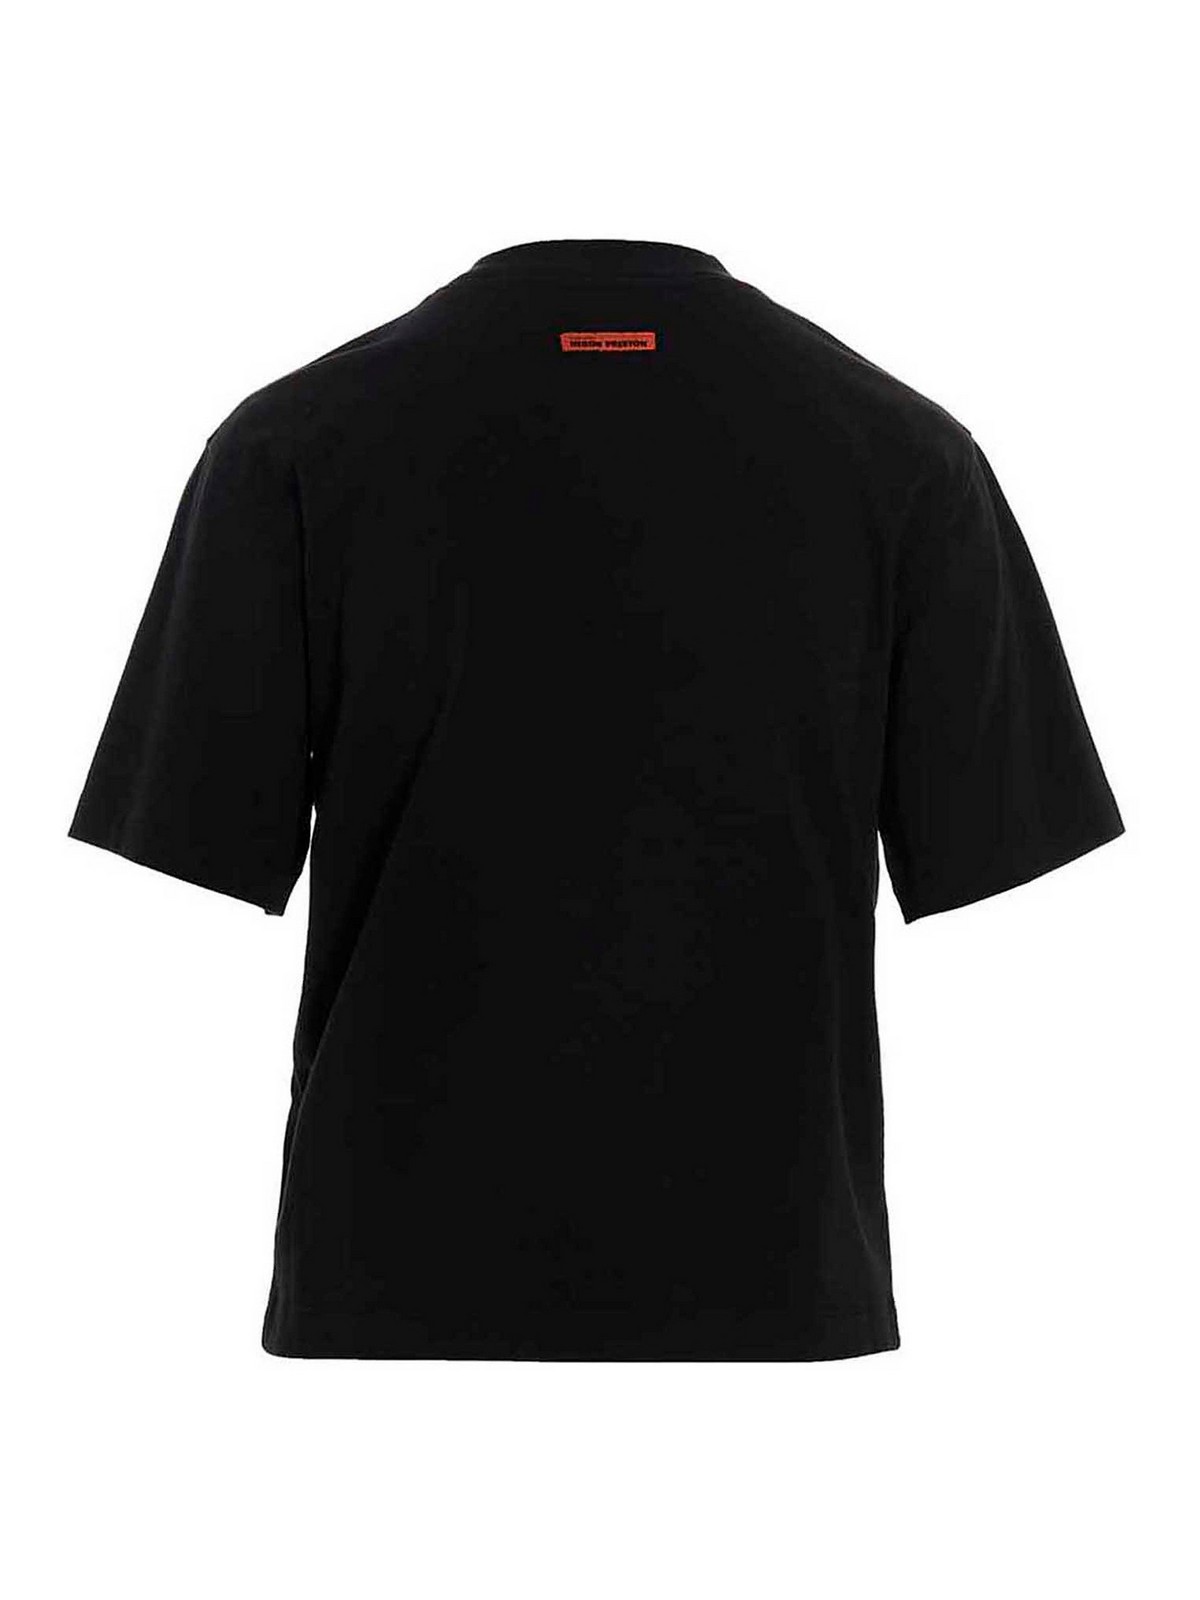 Shop Heron Preston Hpny T-shirt In Black